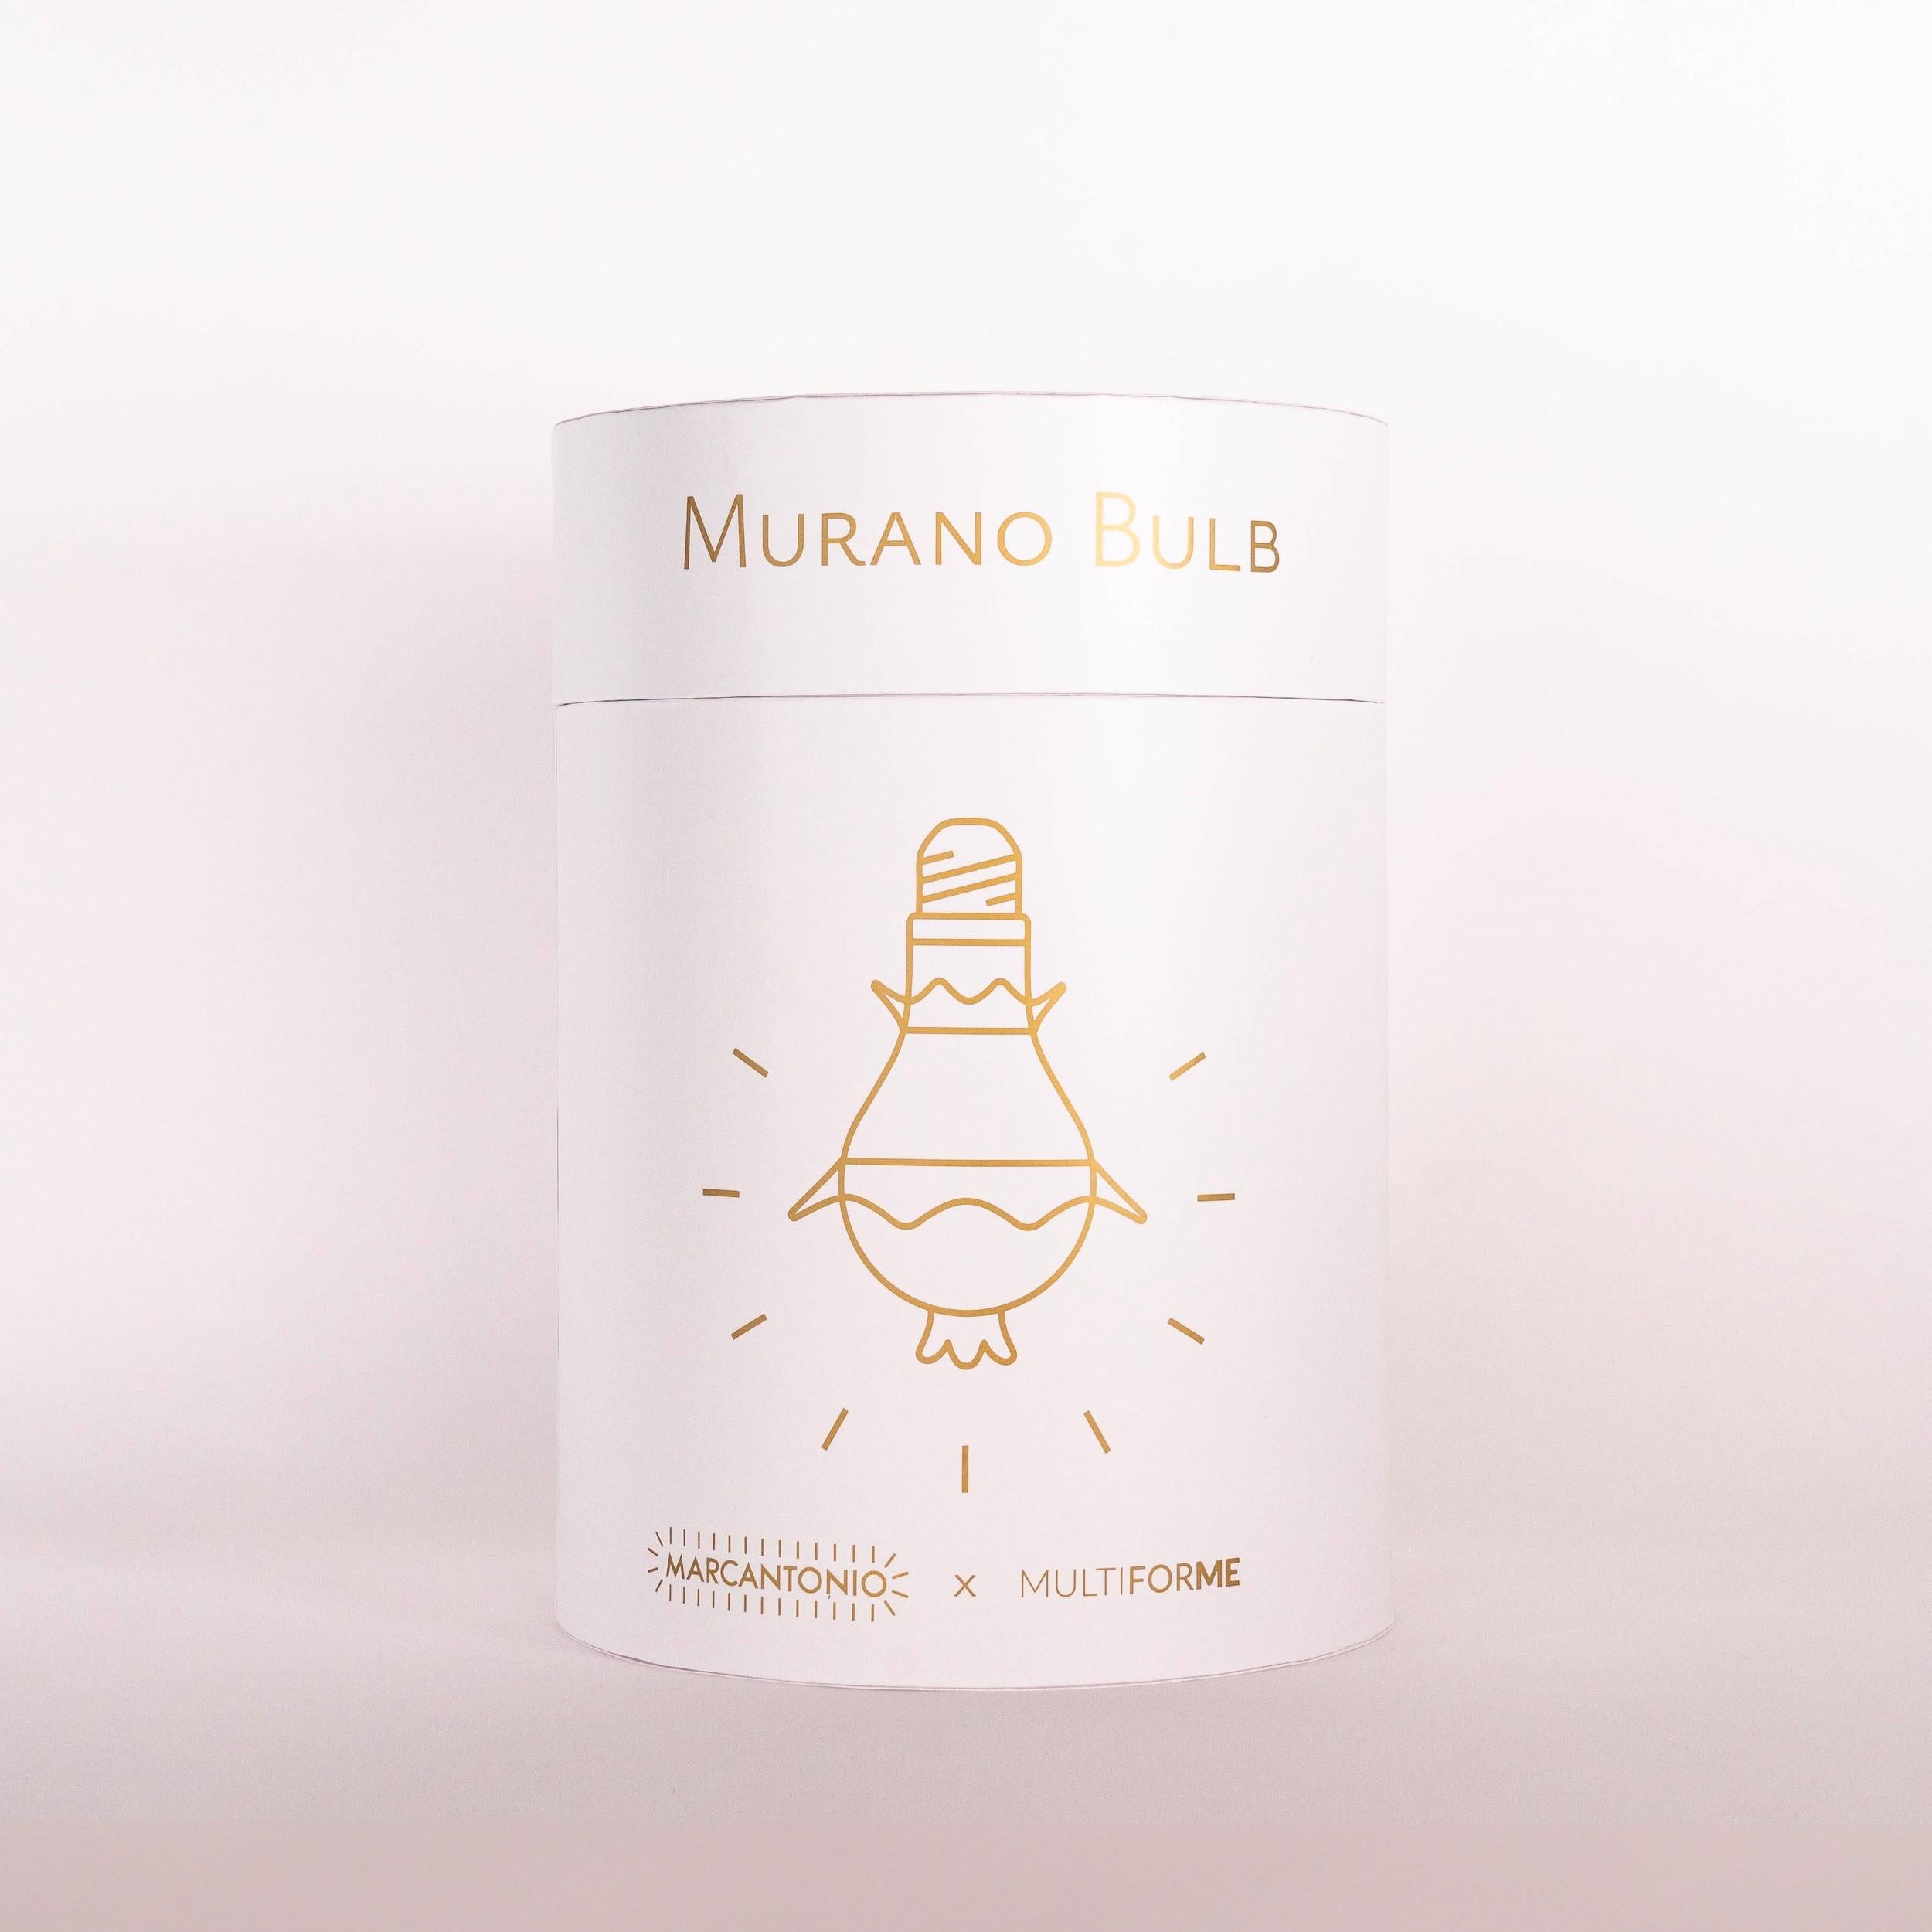 Artistic glass lightbulb chandelier Murano Bulb Marcantonio X Multiforme #06 For Sale 4